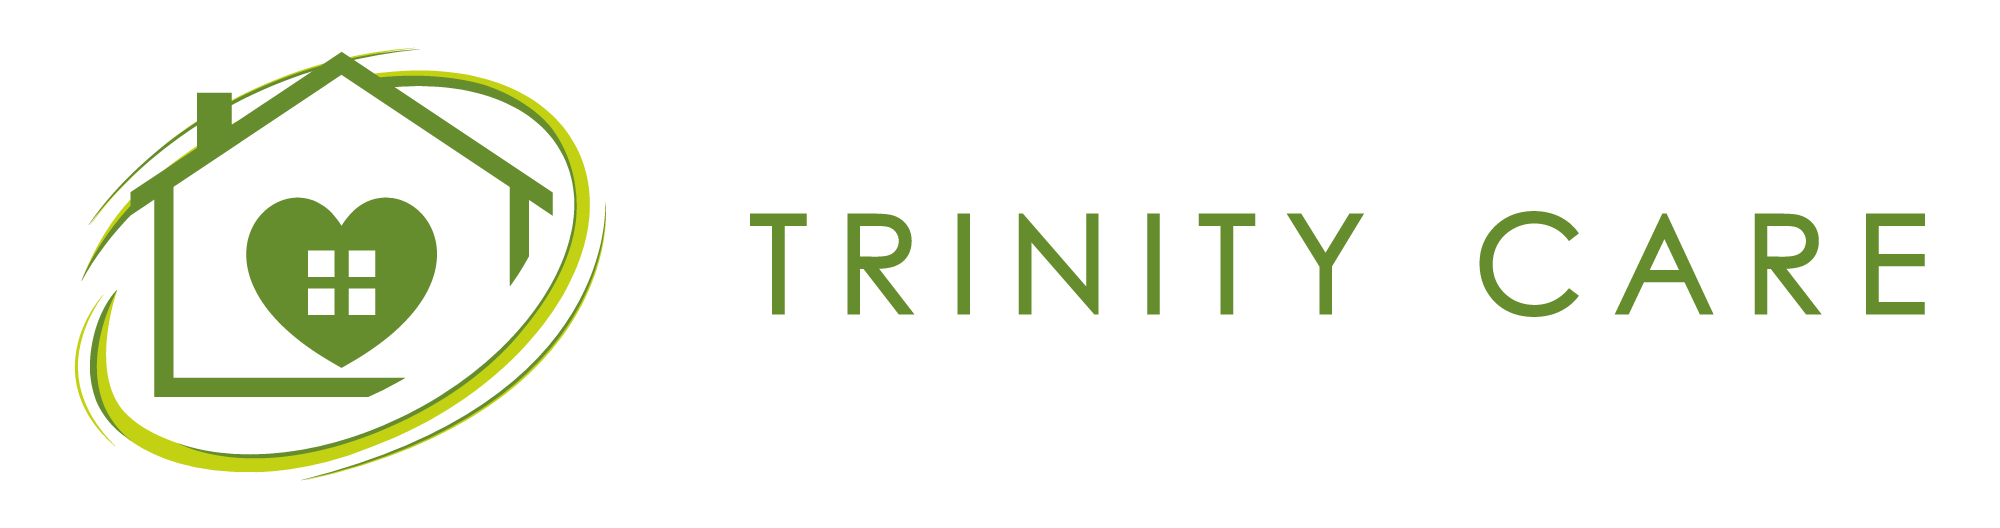 trinity-care-logo